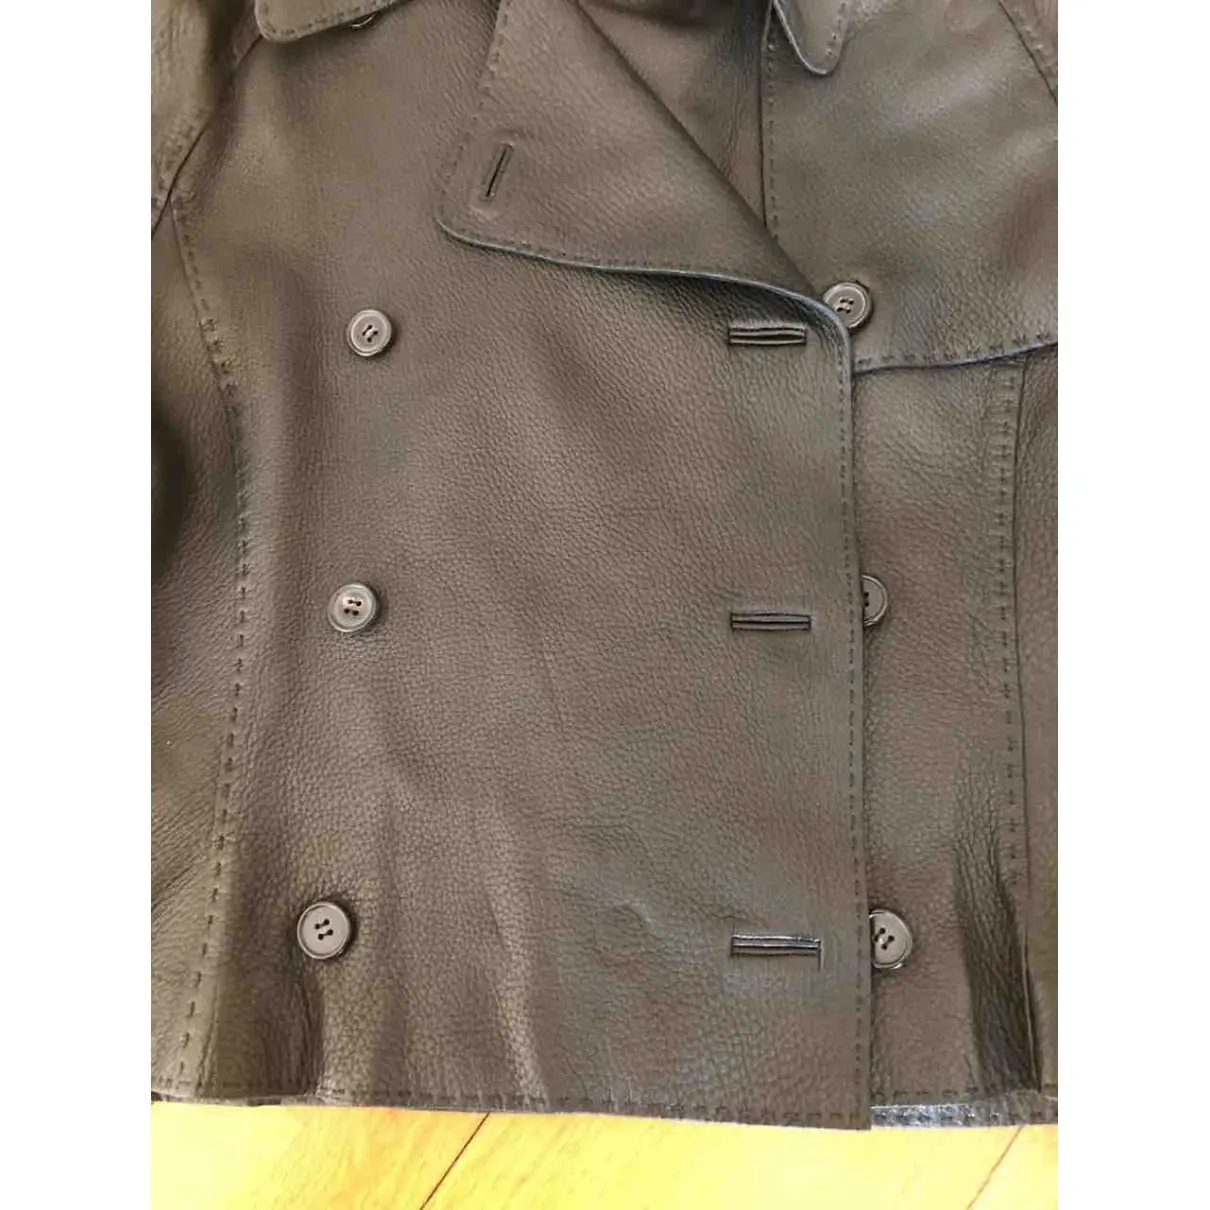 Hermès Leather suit jacket for sale - Vintage